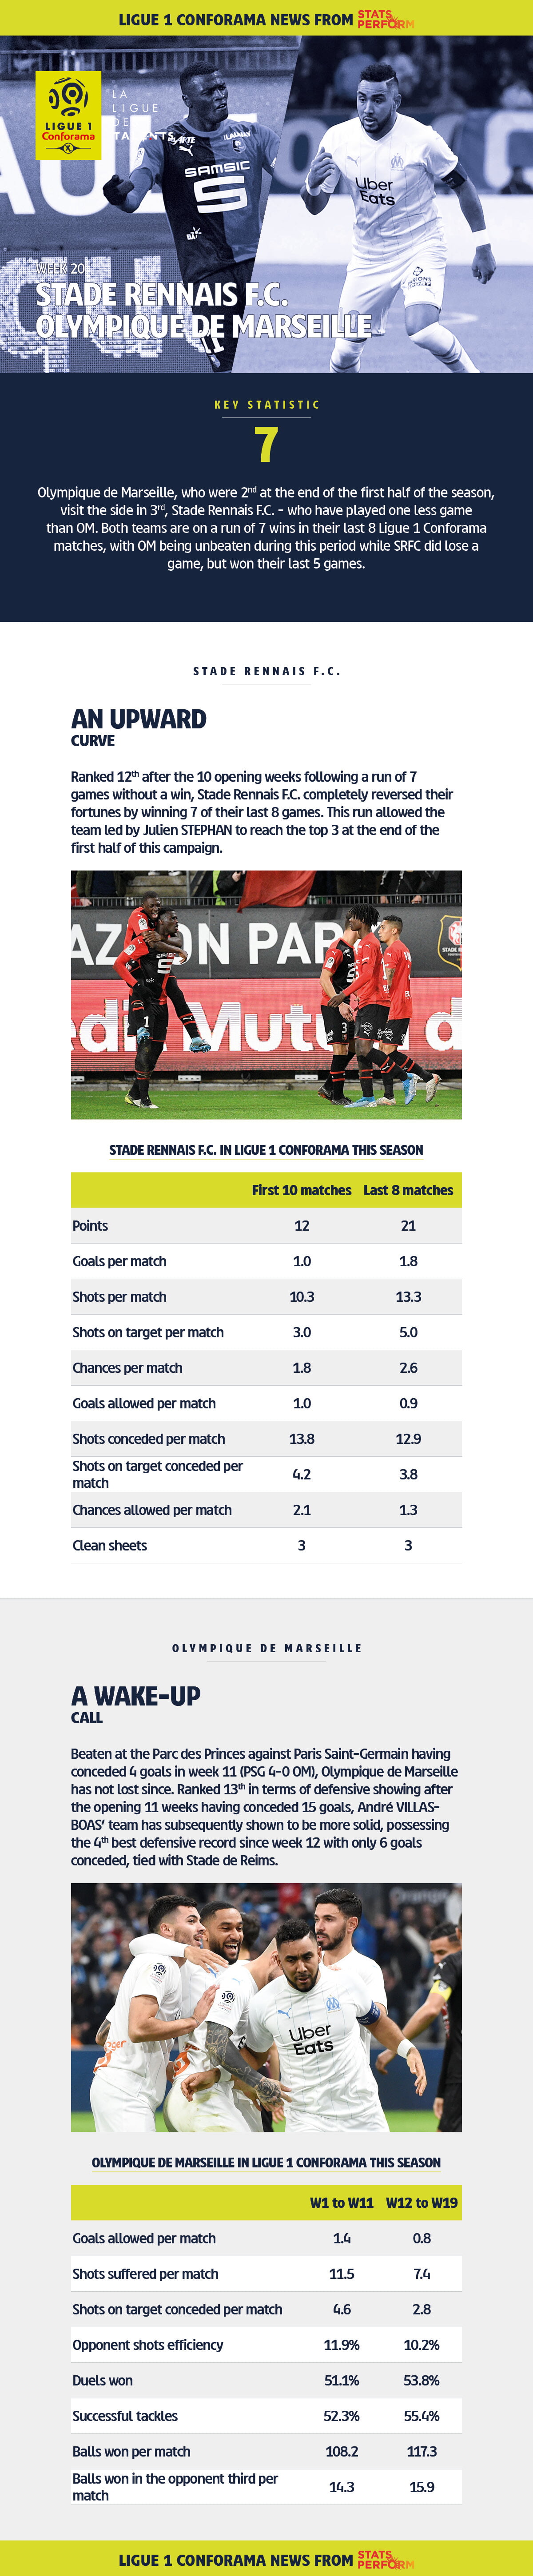 Statattack Week 20: Rennes vs OM